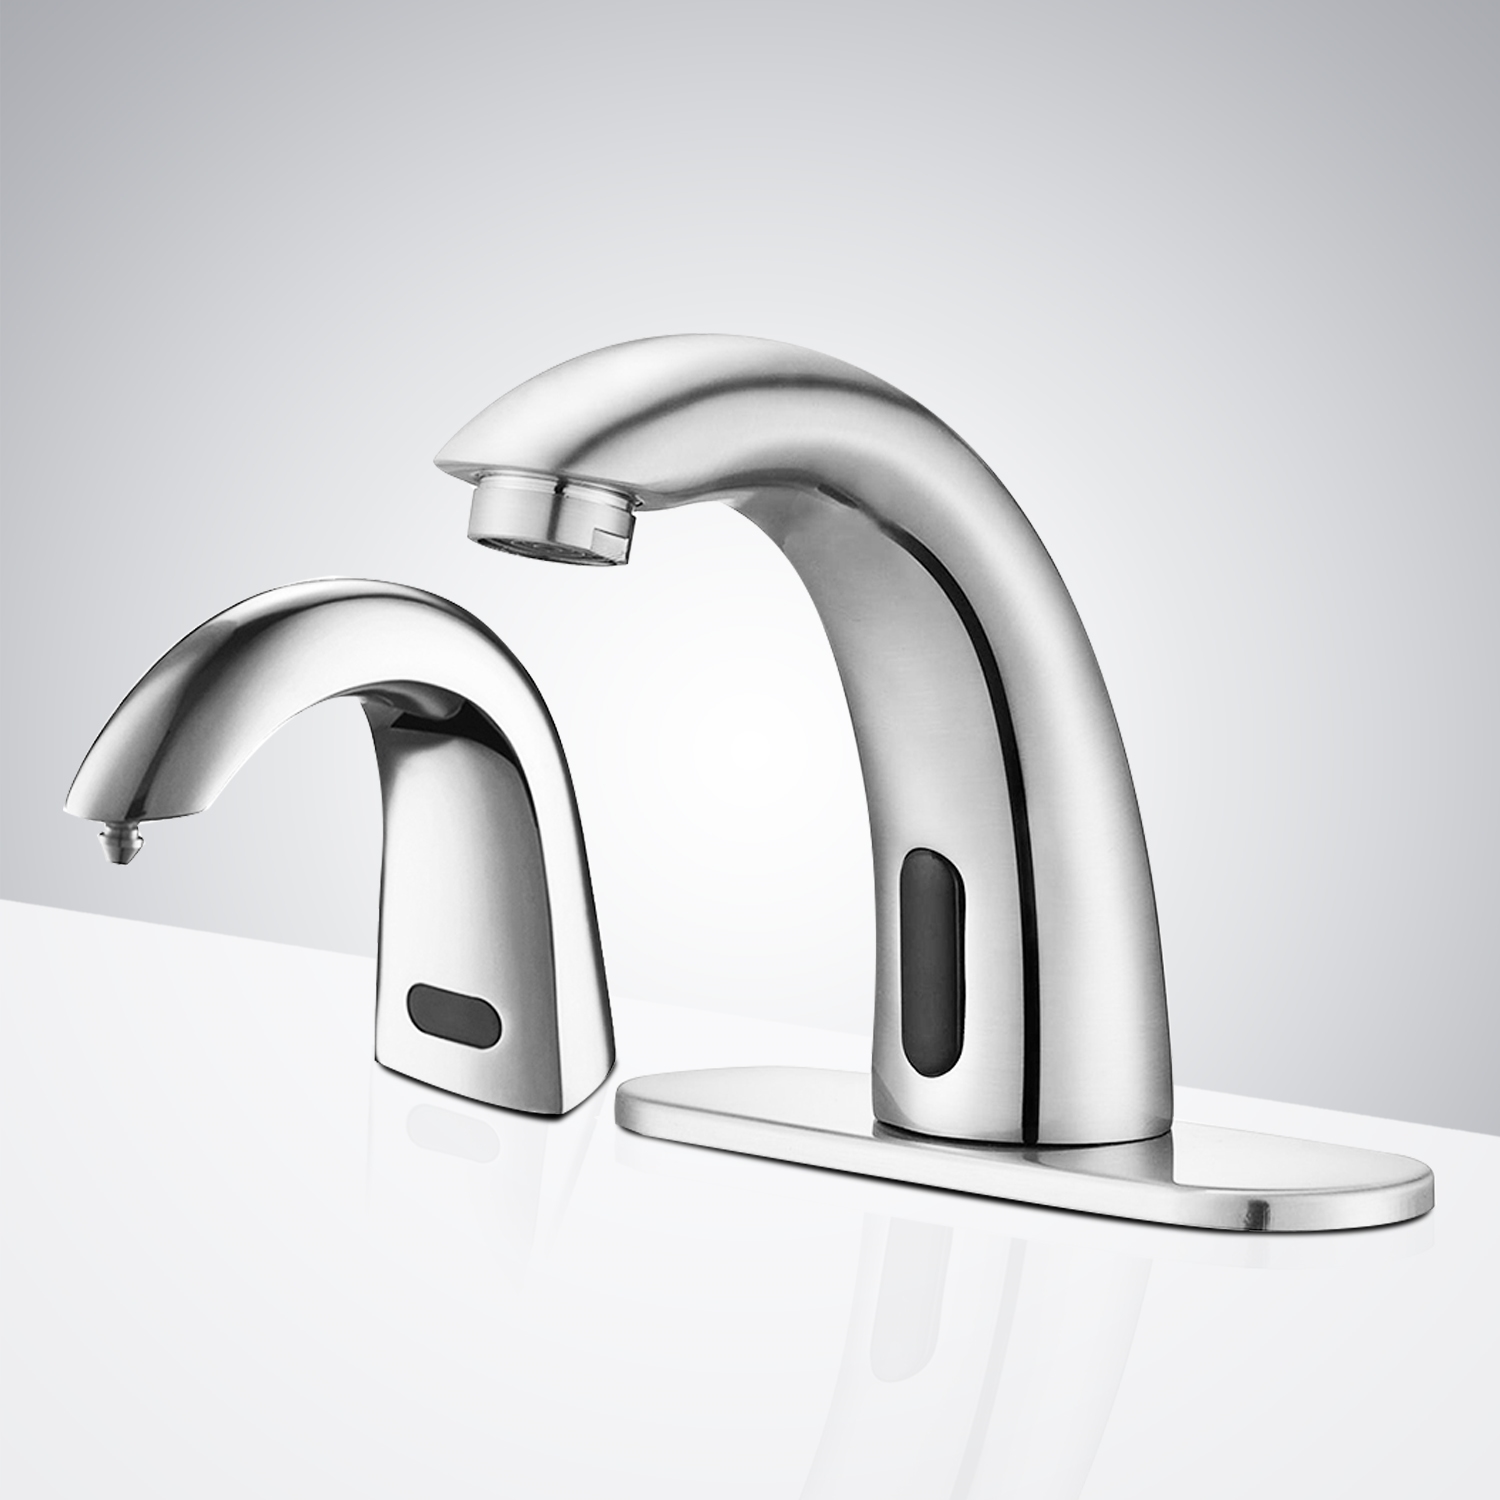 Fontana Marsala Gooseneck Automatic Motion Sensor Faucet & Automatic Liquid Soap Dispenser for Restrooms in Chrome